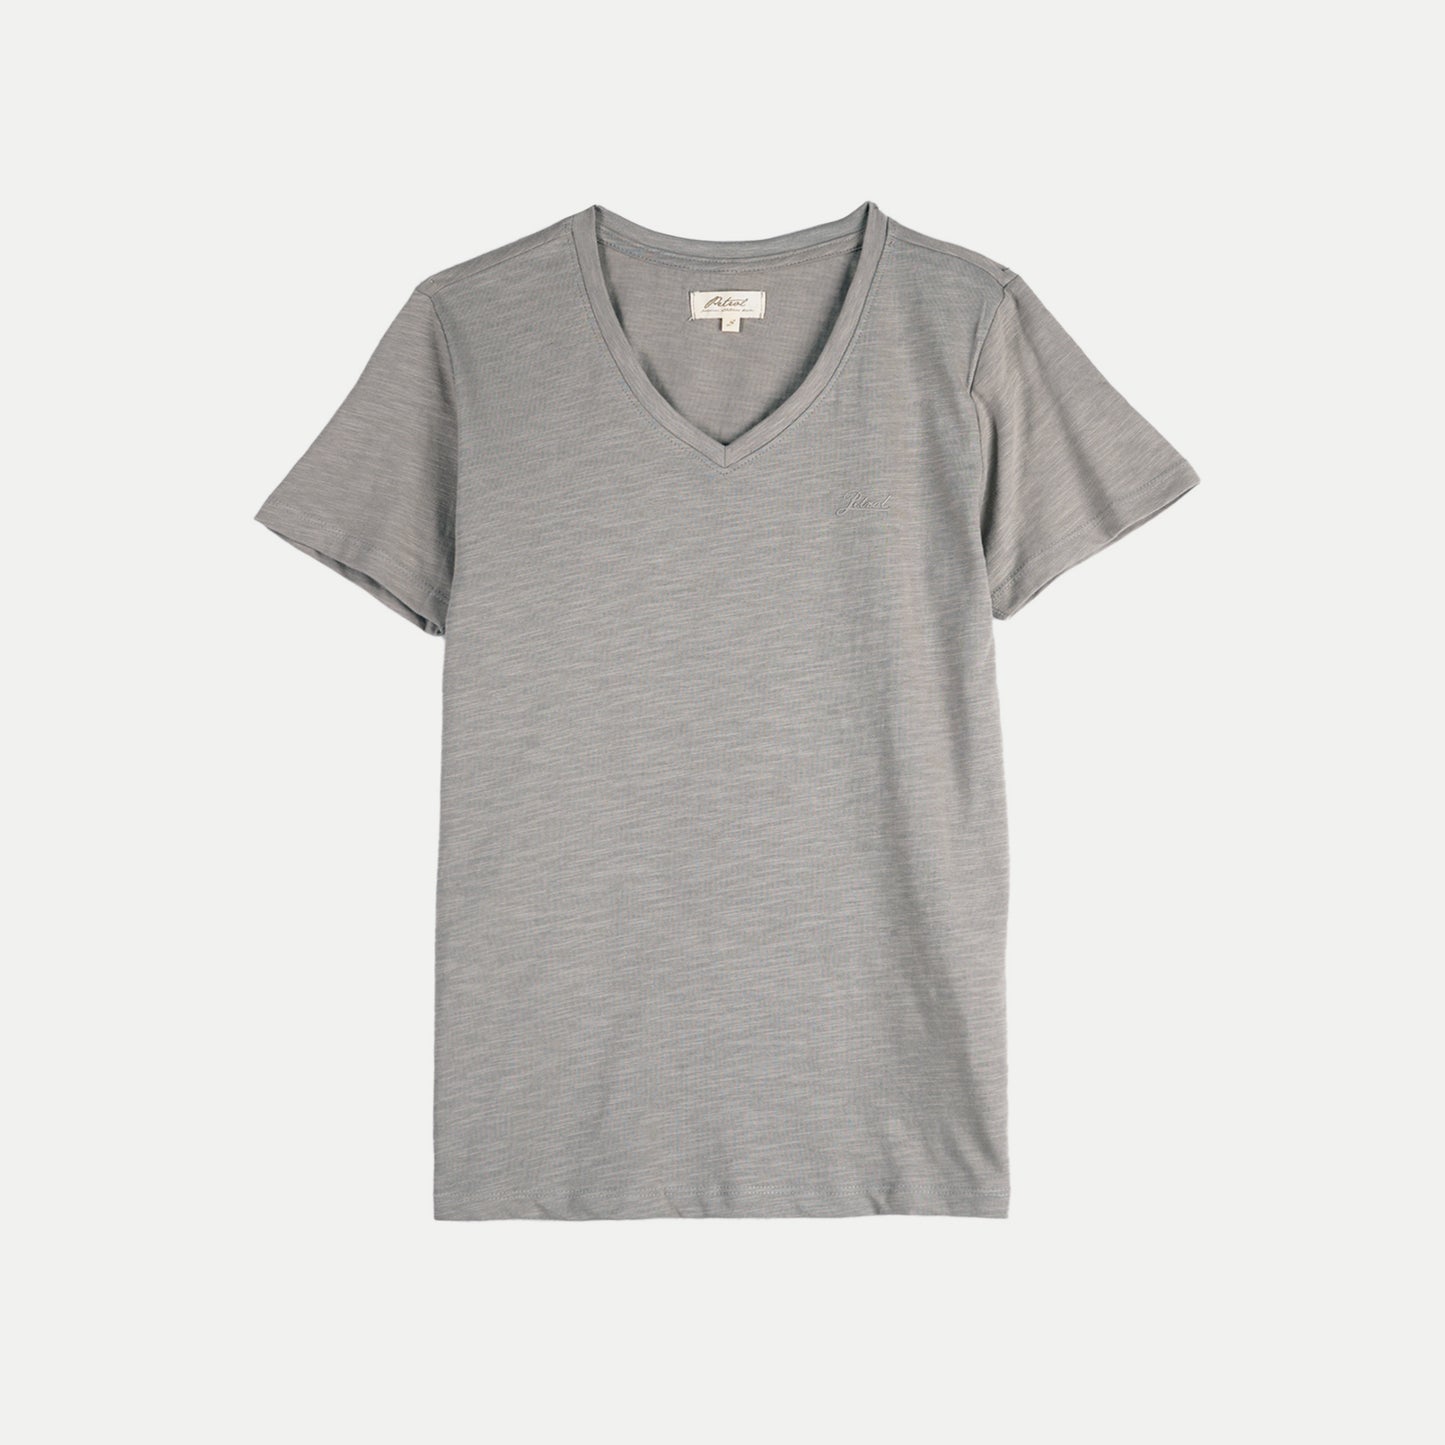 Petrol Basic Tees for Ladies Regular Fitting Shirt CVC Jersey Fabric Trendy fashion Casual Top Light Gray T-shirt for Ladies 107412-U (Light Gray)